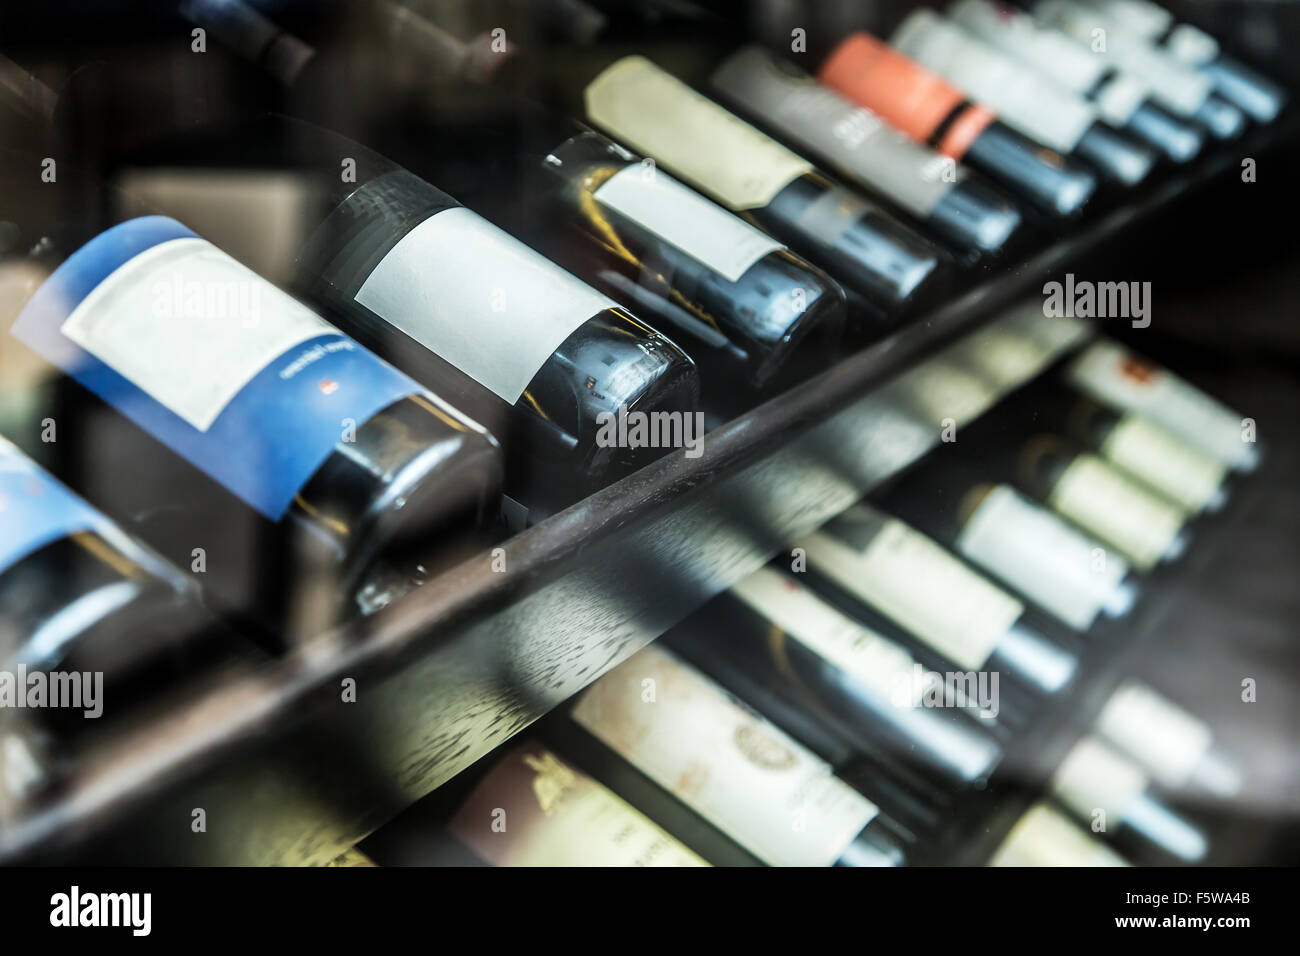 Bottles of wine on the wooden shelf. Stock Photo